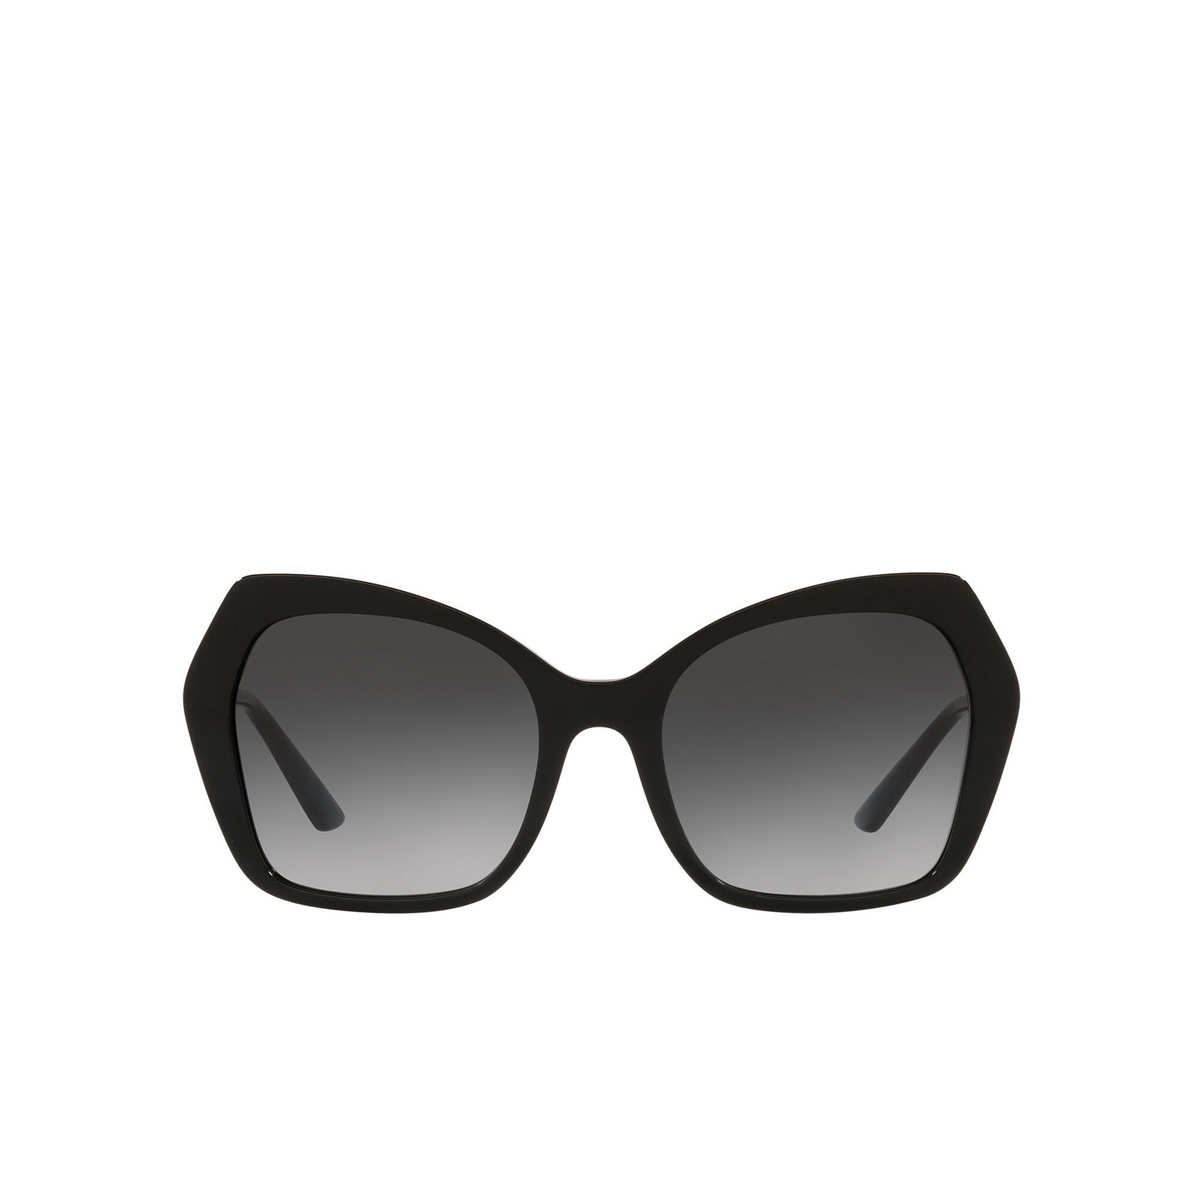 Dolce & Gabbana® Butterfly Sunglasses: DG4399 color Black 501/8G - front view.